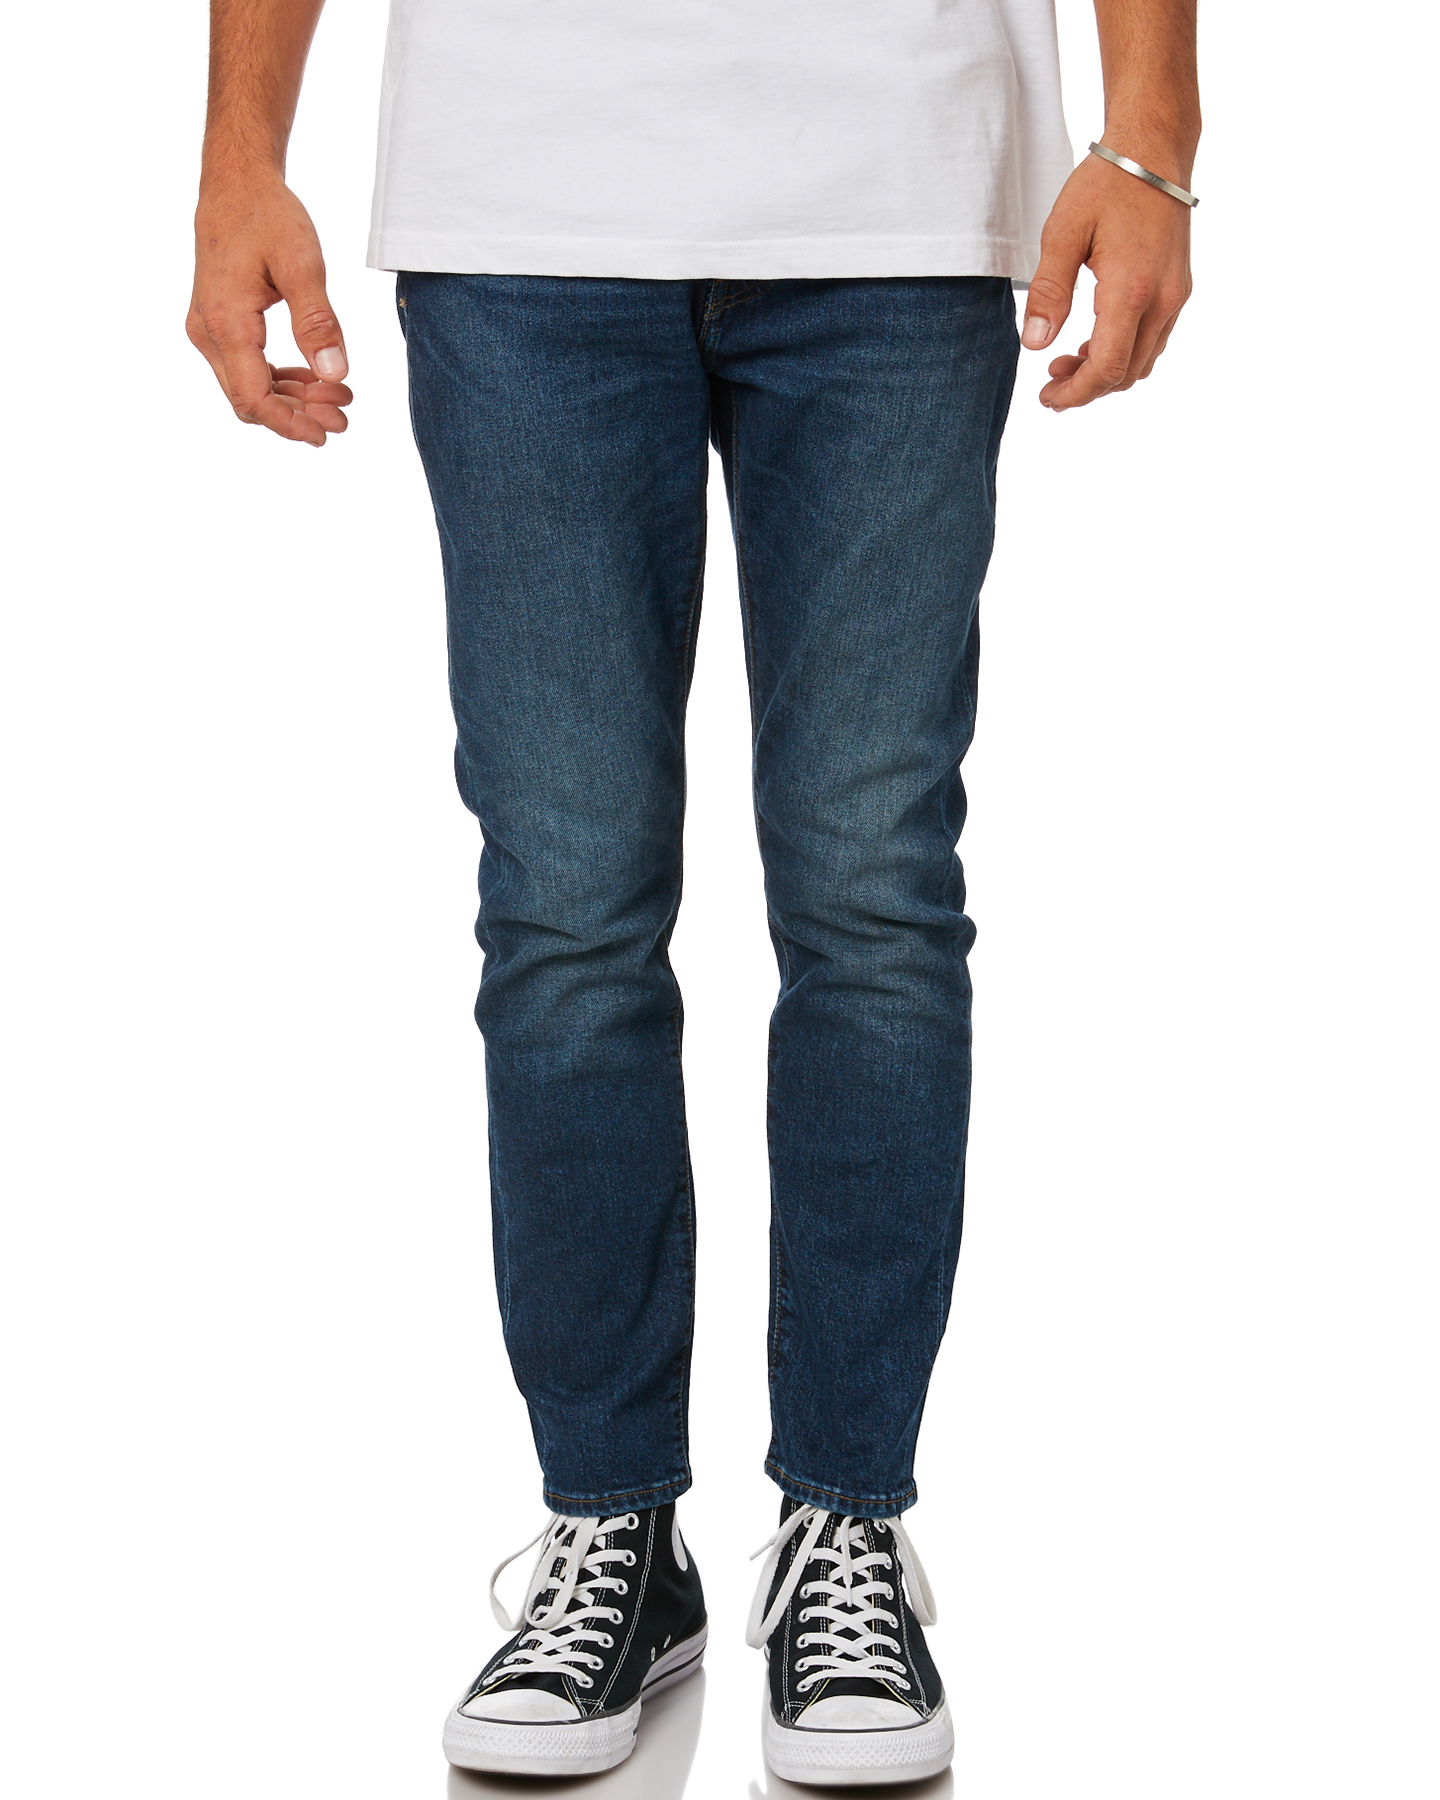 cross pocket jeans levis